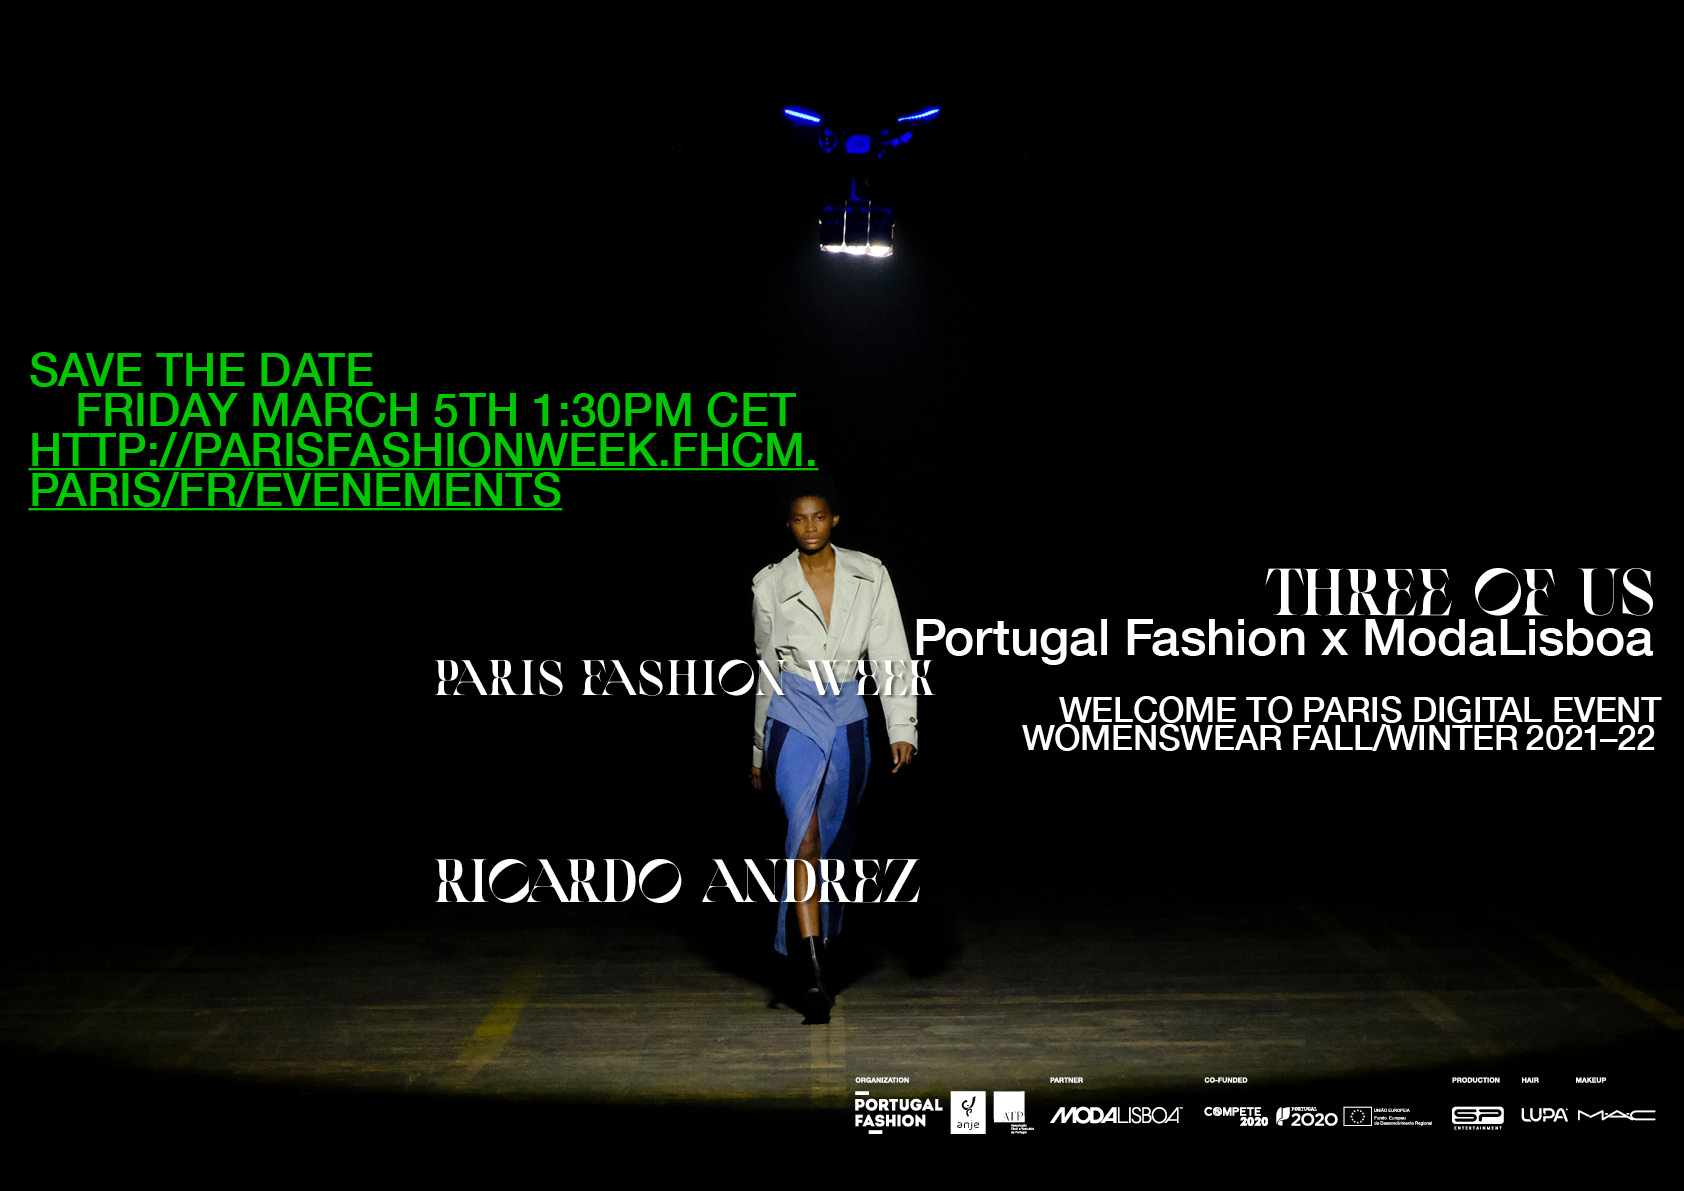 Portugal Fashion and ModaLisboa Portugal Fashion et ModaLisboa AutrementPR